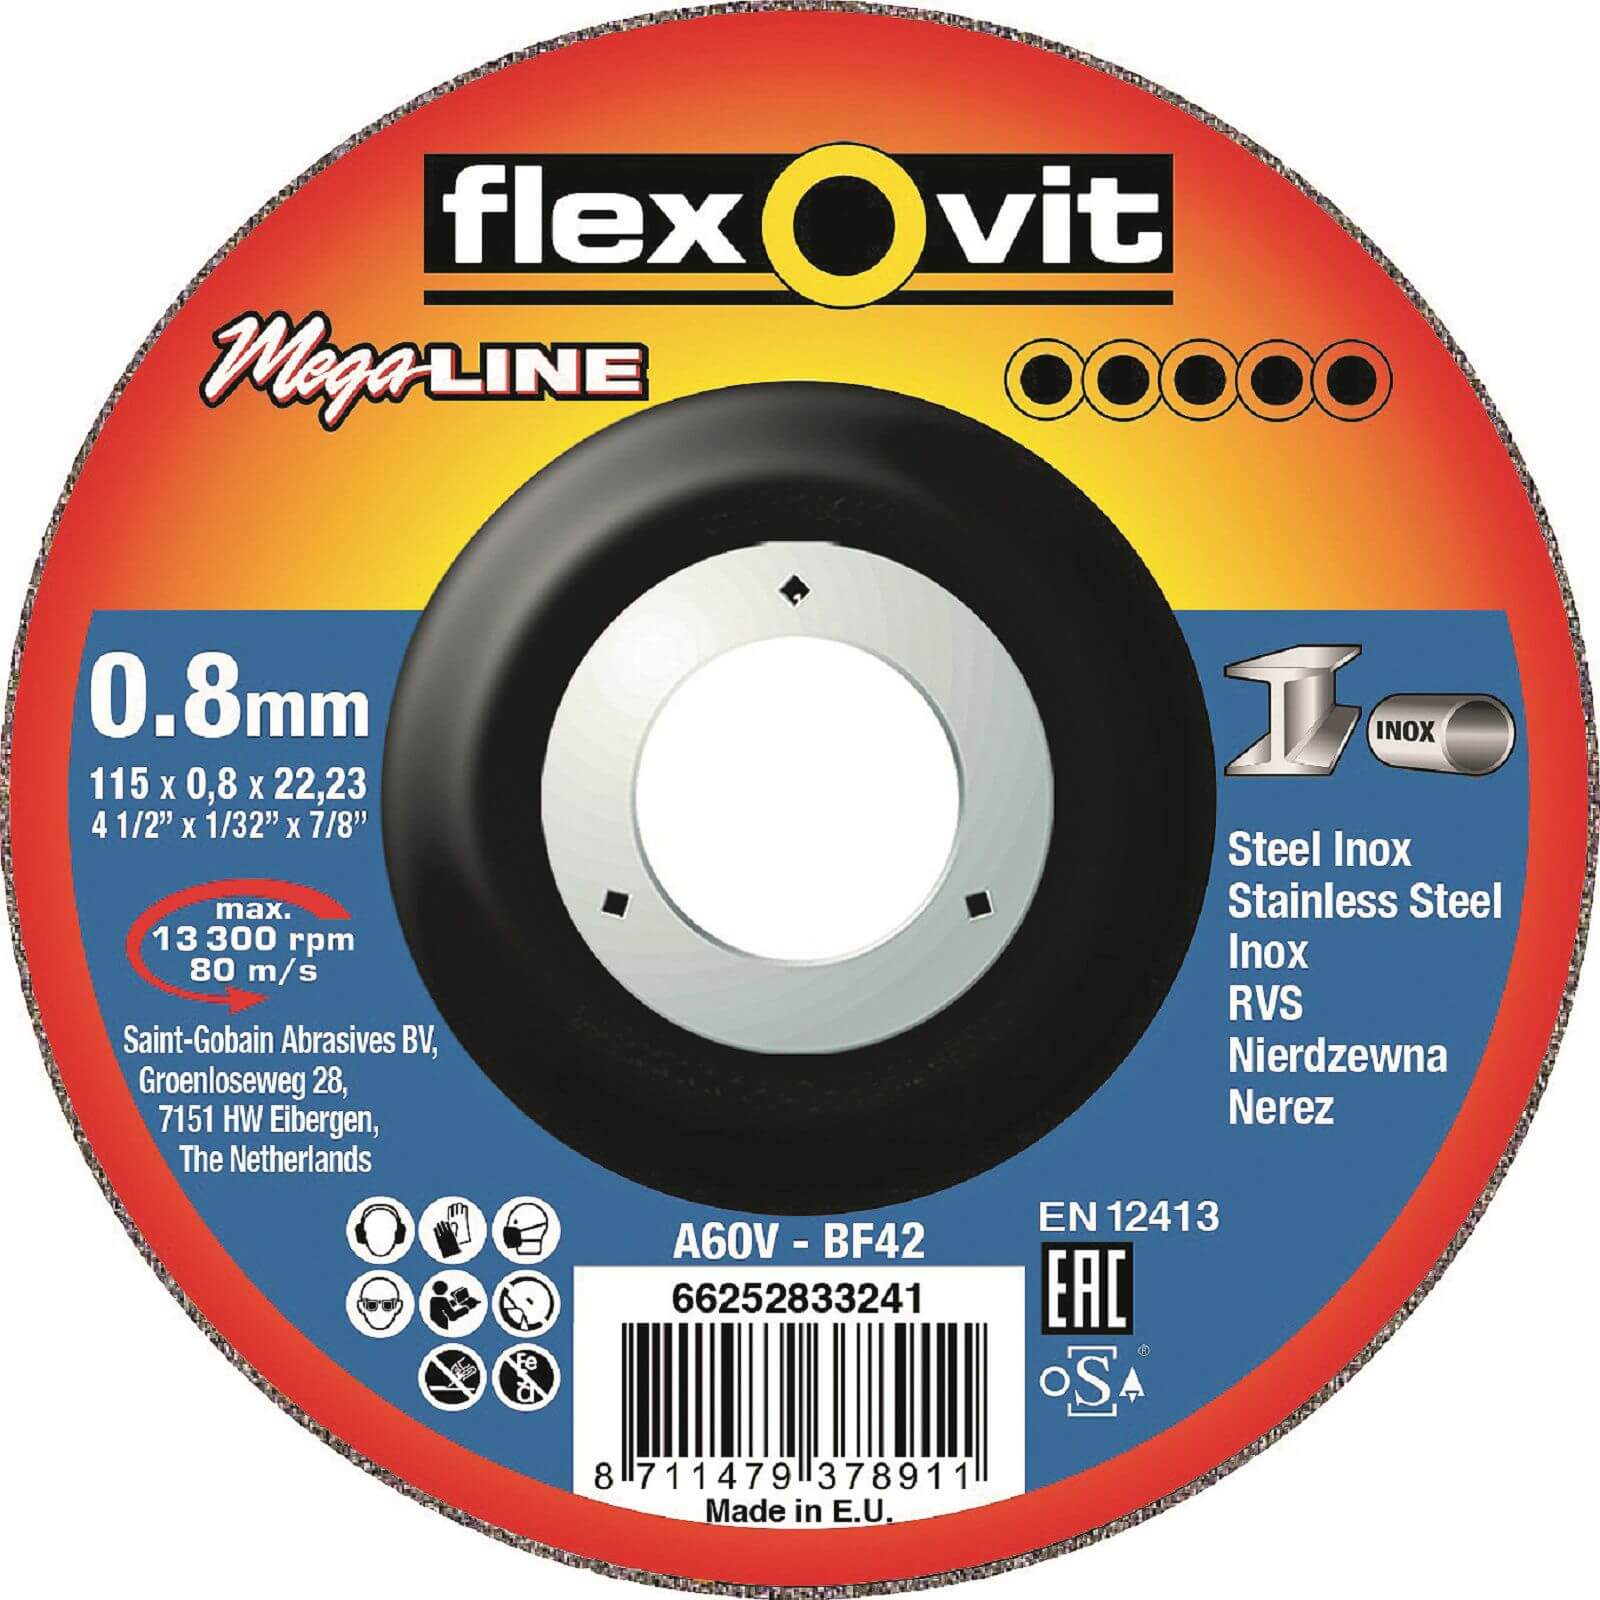 Flexovit Megaline Steel Inox Cutting Off Wheel - 115mm